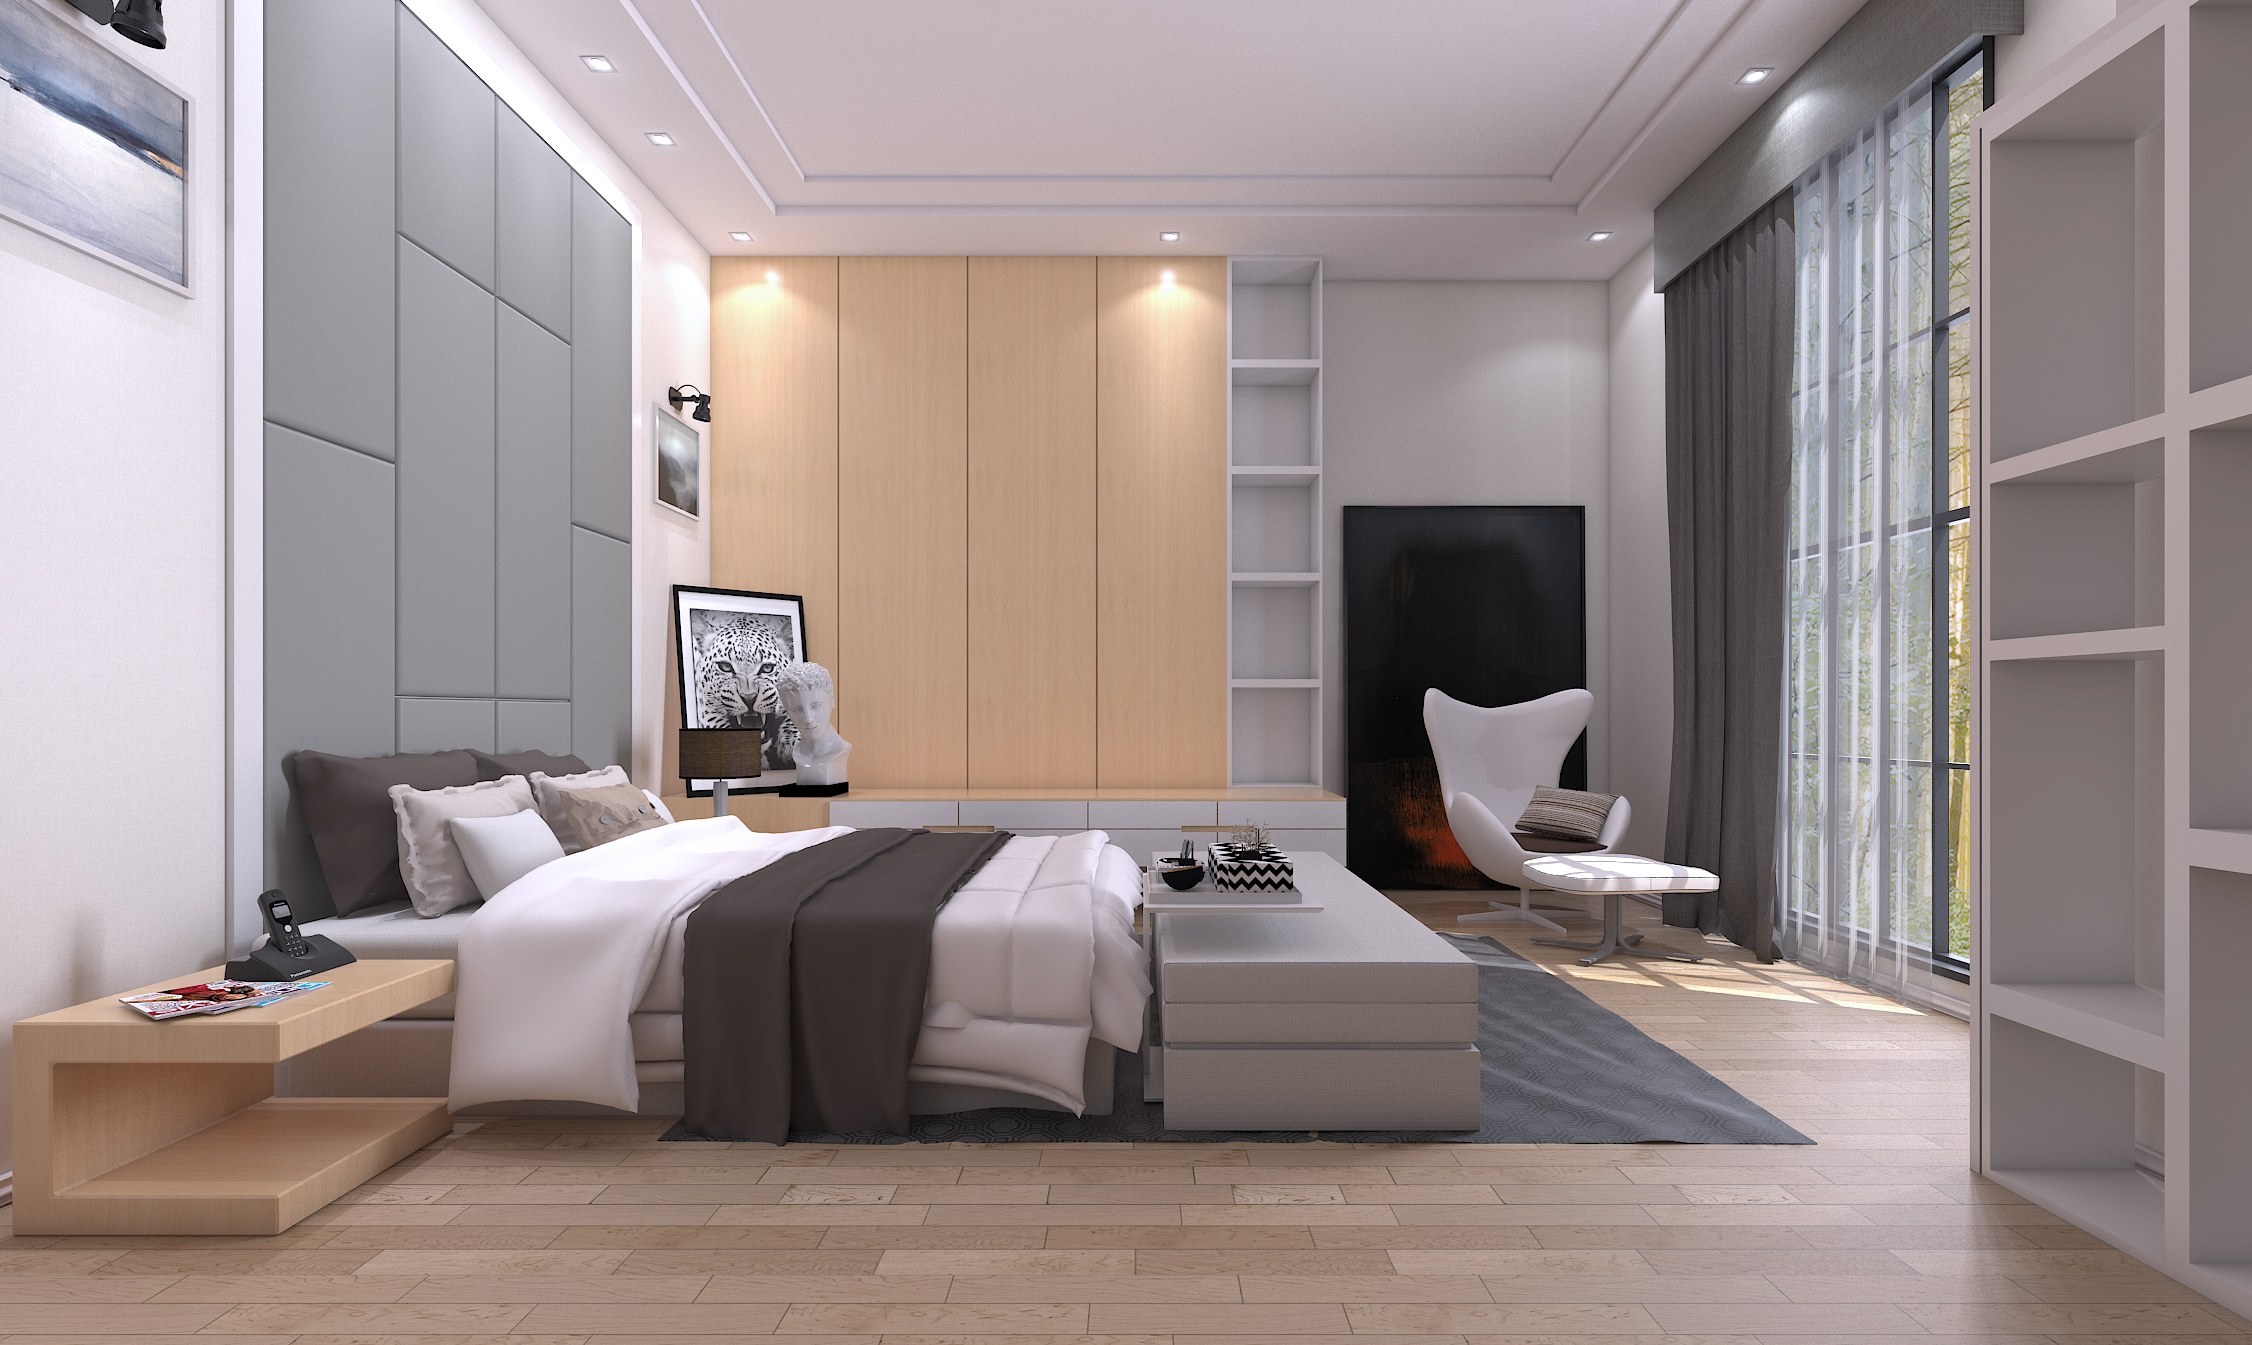 Master Bedroom By Adnan Anbari 823 Sketchuptexture - bedroom interior 3d model free download